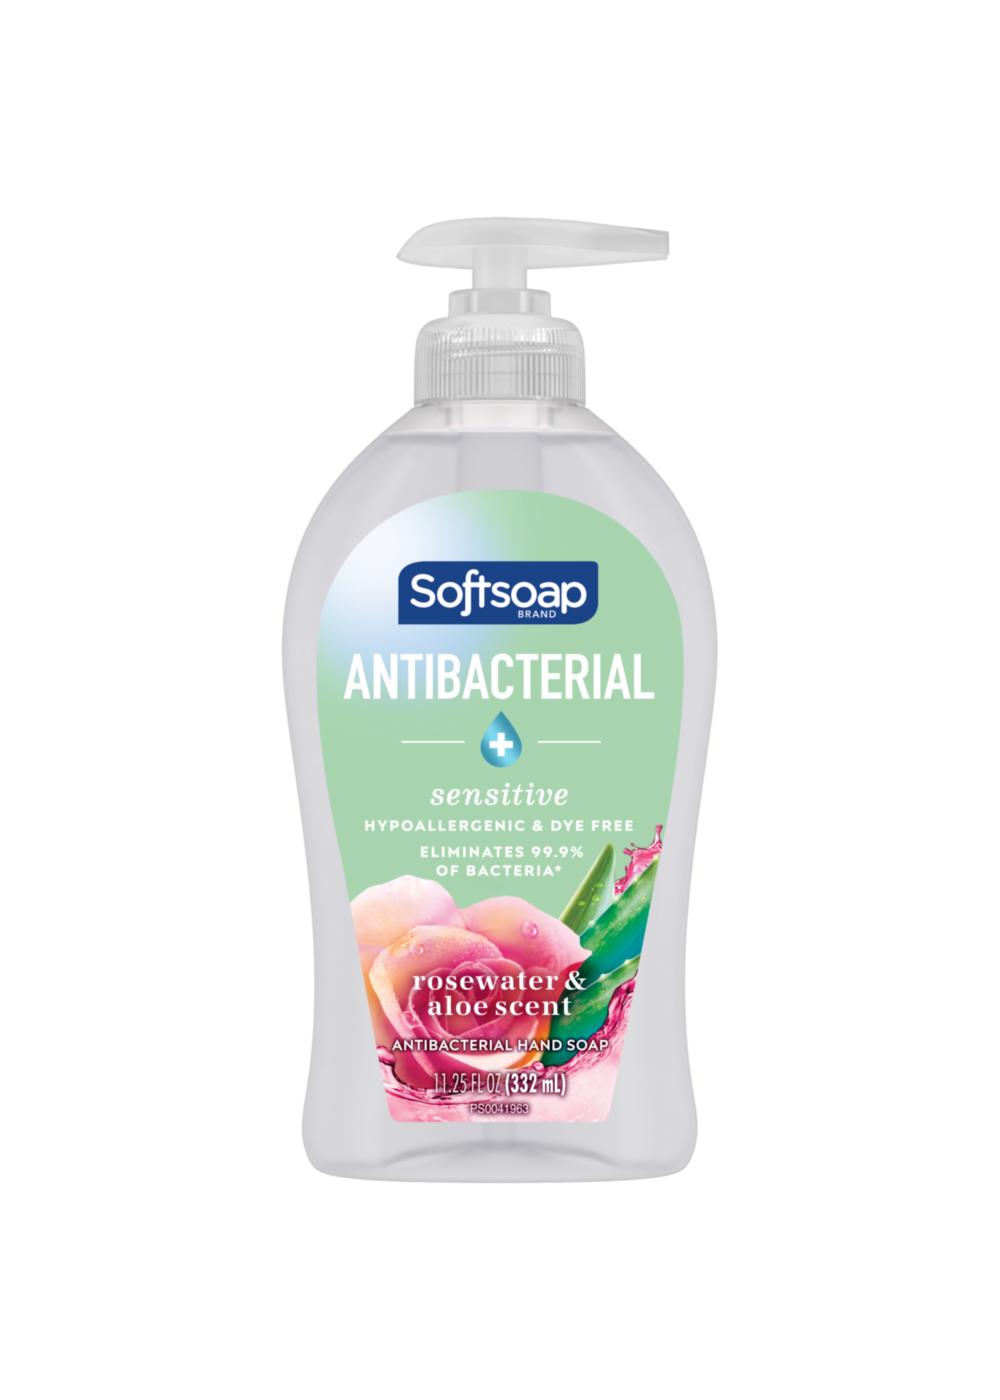 Softsoap Antibacterial Hand Soap - Rosewater & Aloe; image 1 of 2